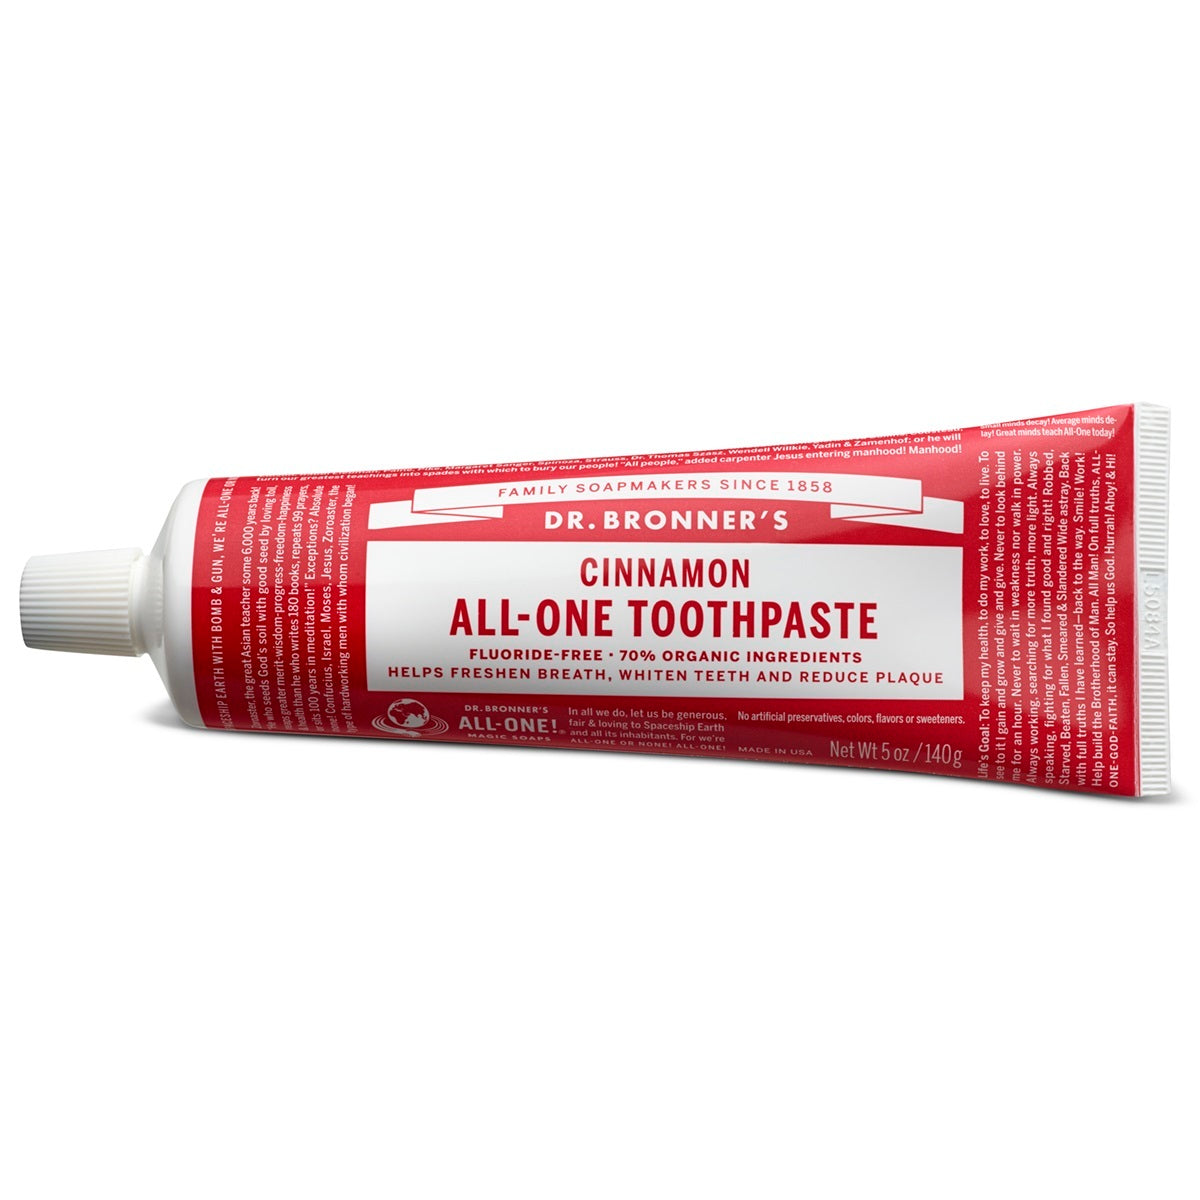 Primary image of Cinnamon Toothpaste